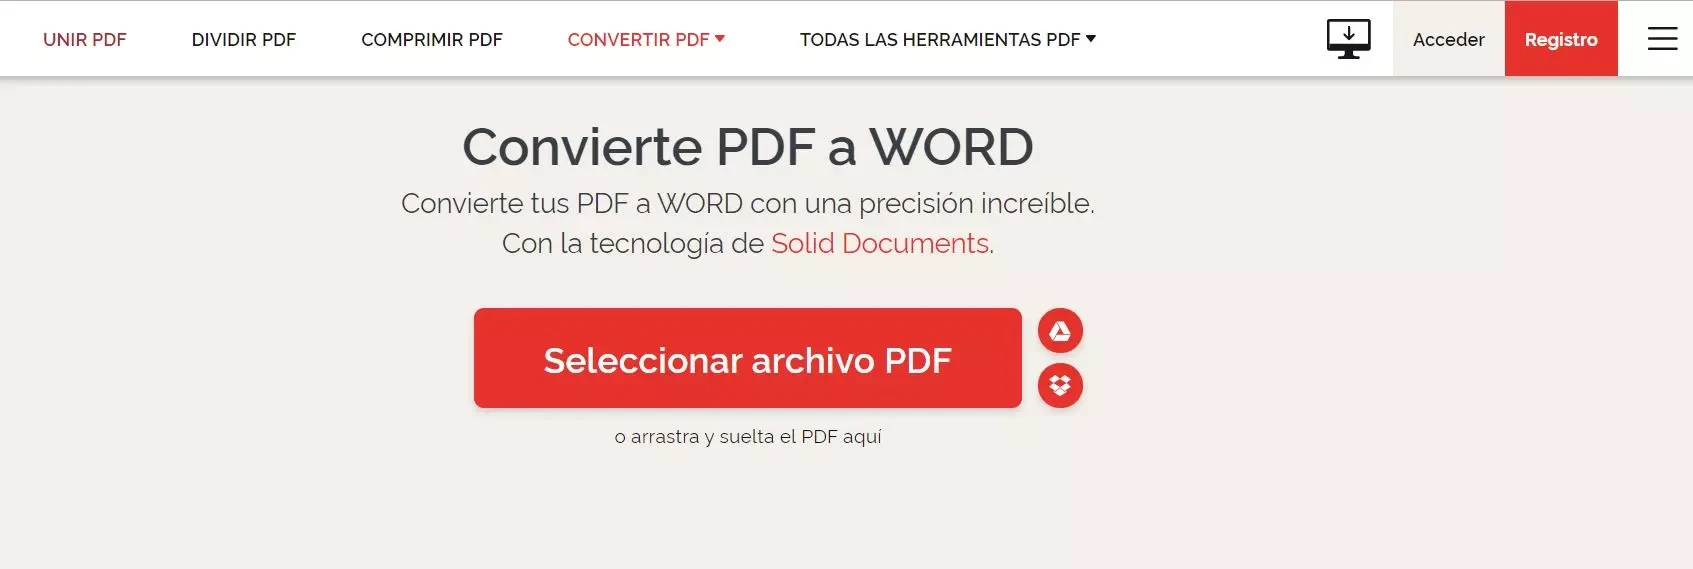 convertir pdf